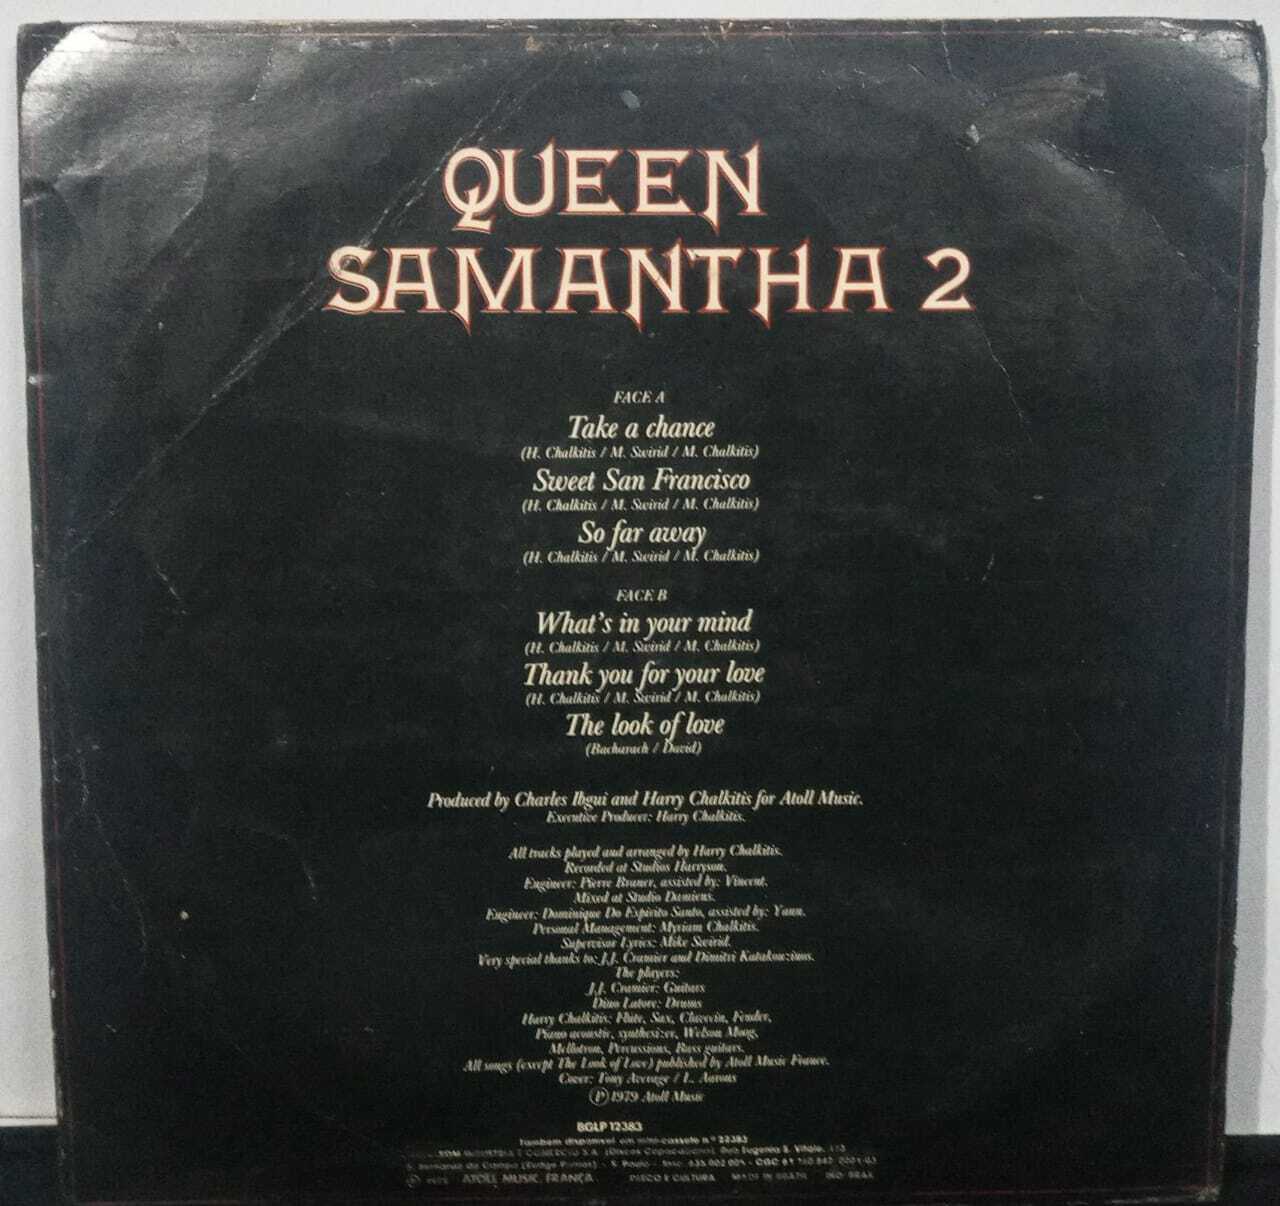 Vinil - Queen Samantha - Queen Samantha 2